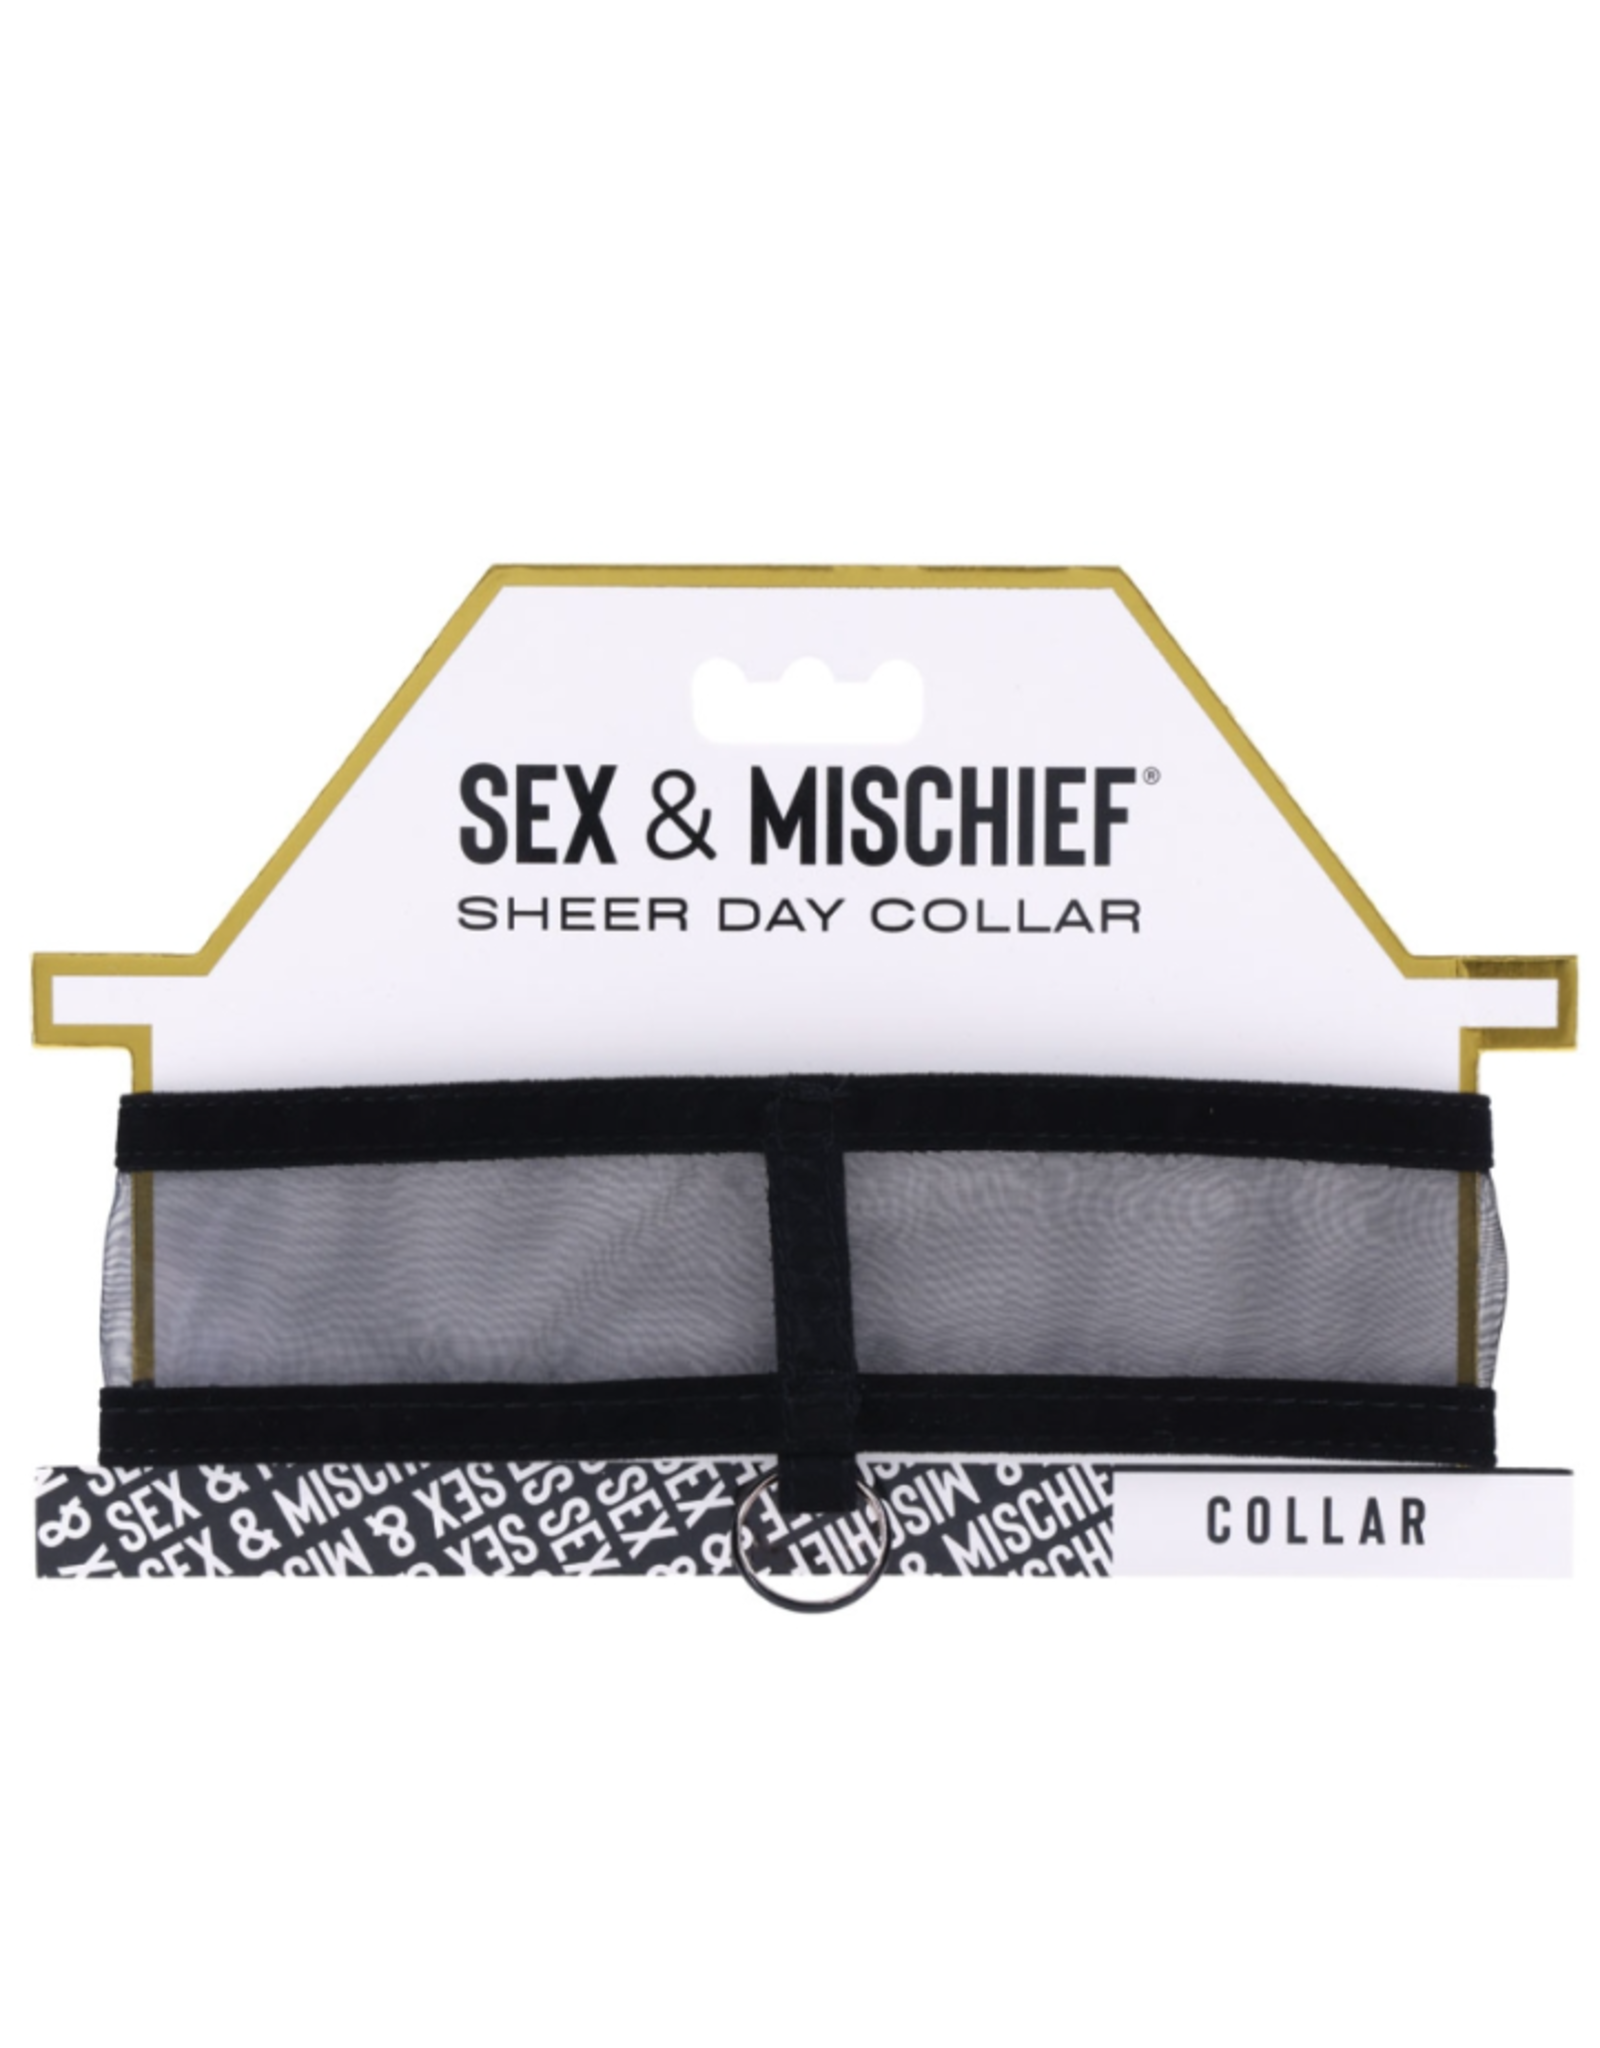 Sportsheets - S&M Sheer Day Collar